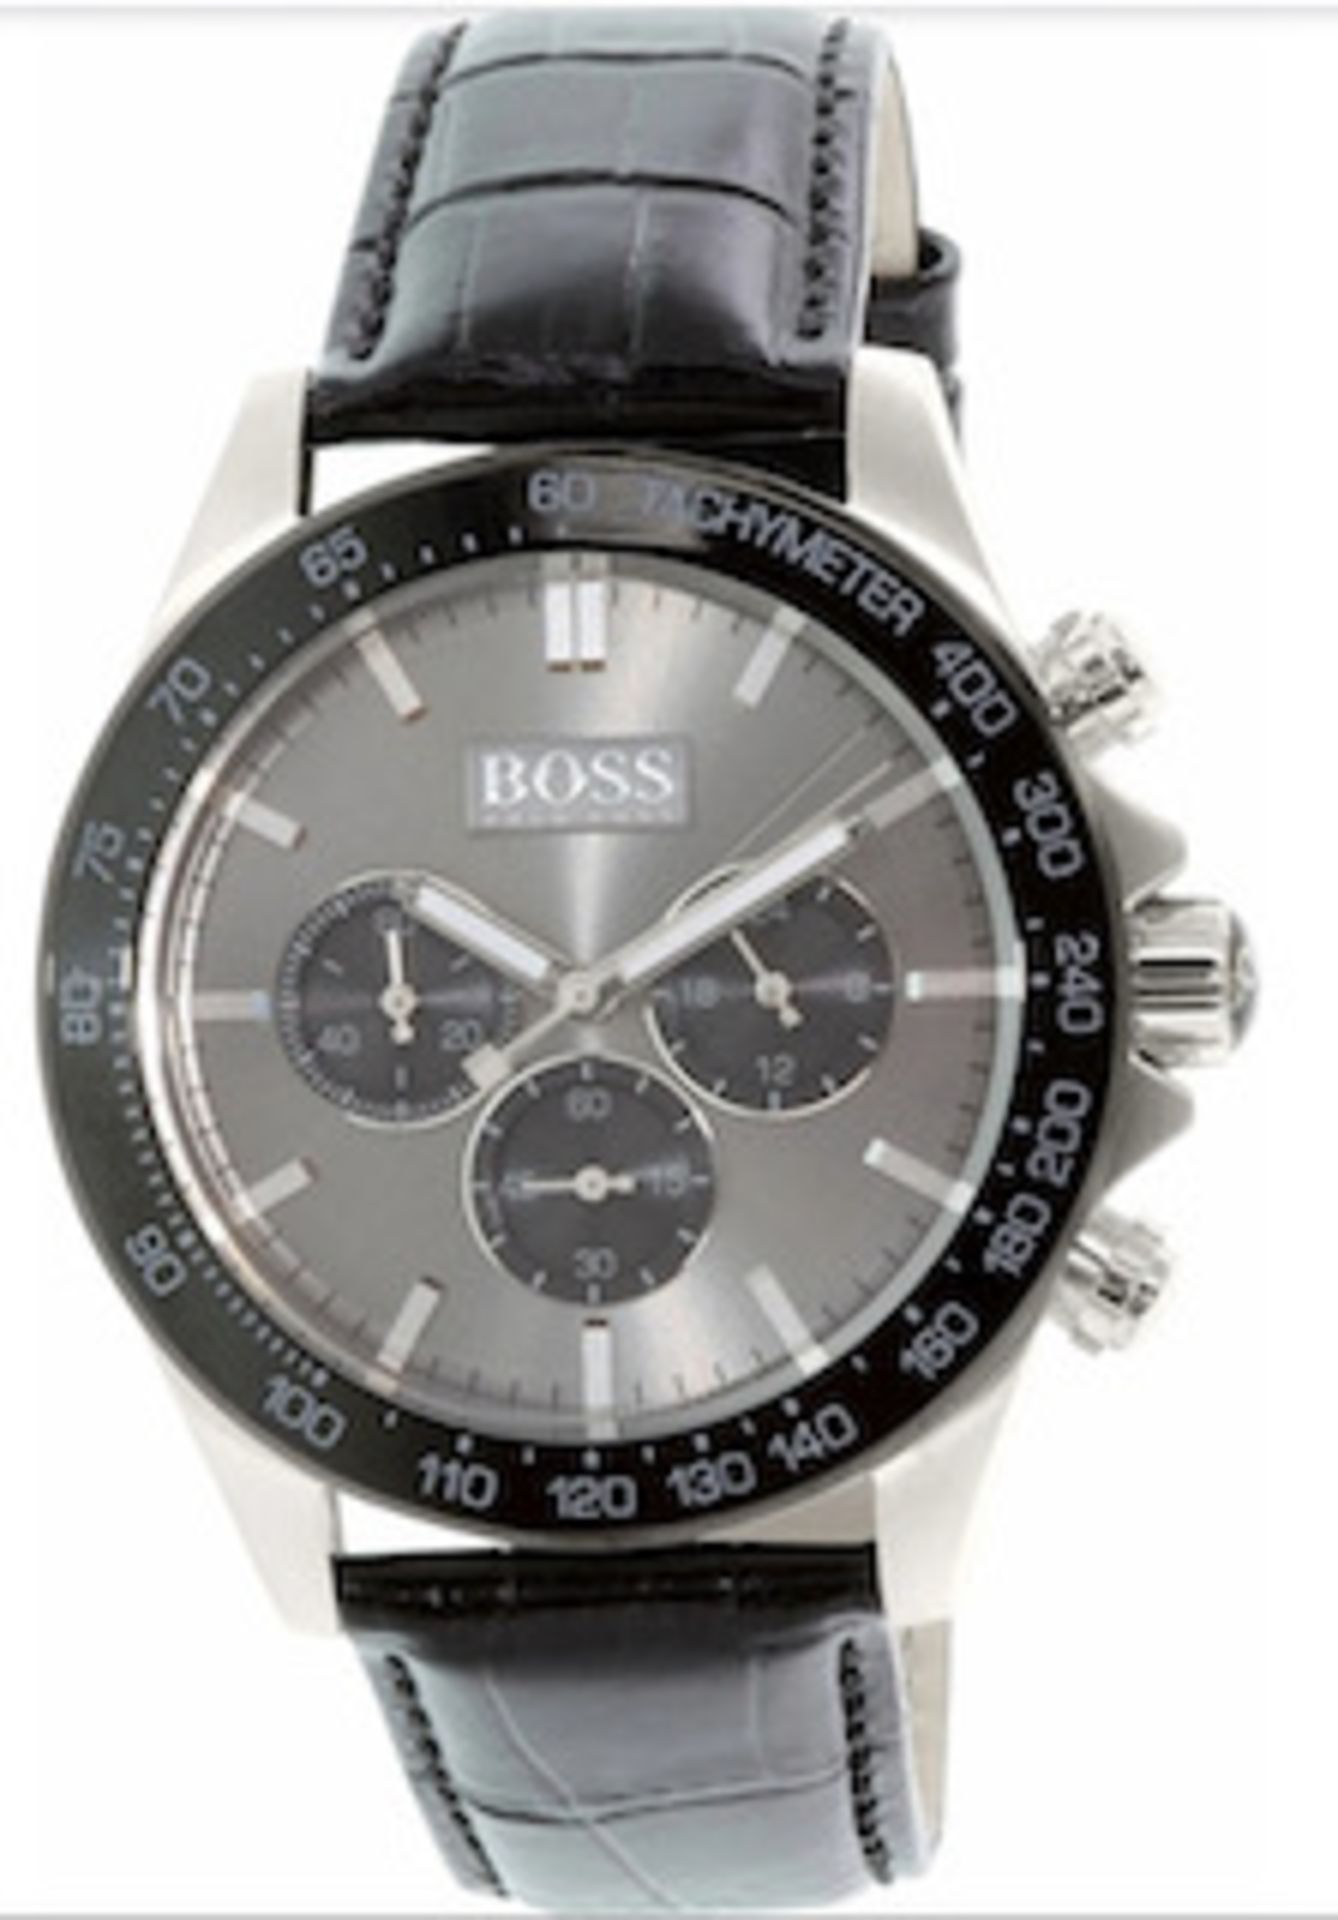 Hugo Boss 1513177 Men's Ikon Black Leather Strap Chronograph Watch - Image 2 of 4